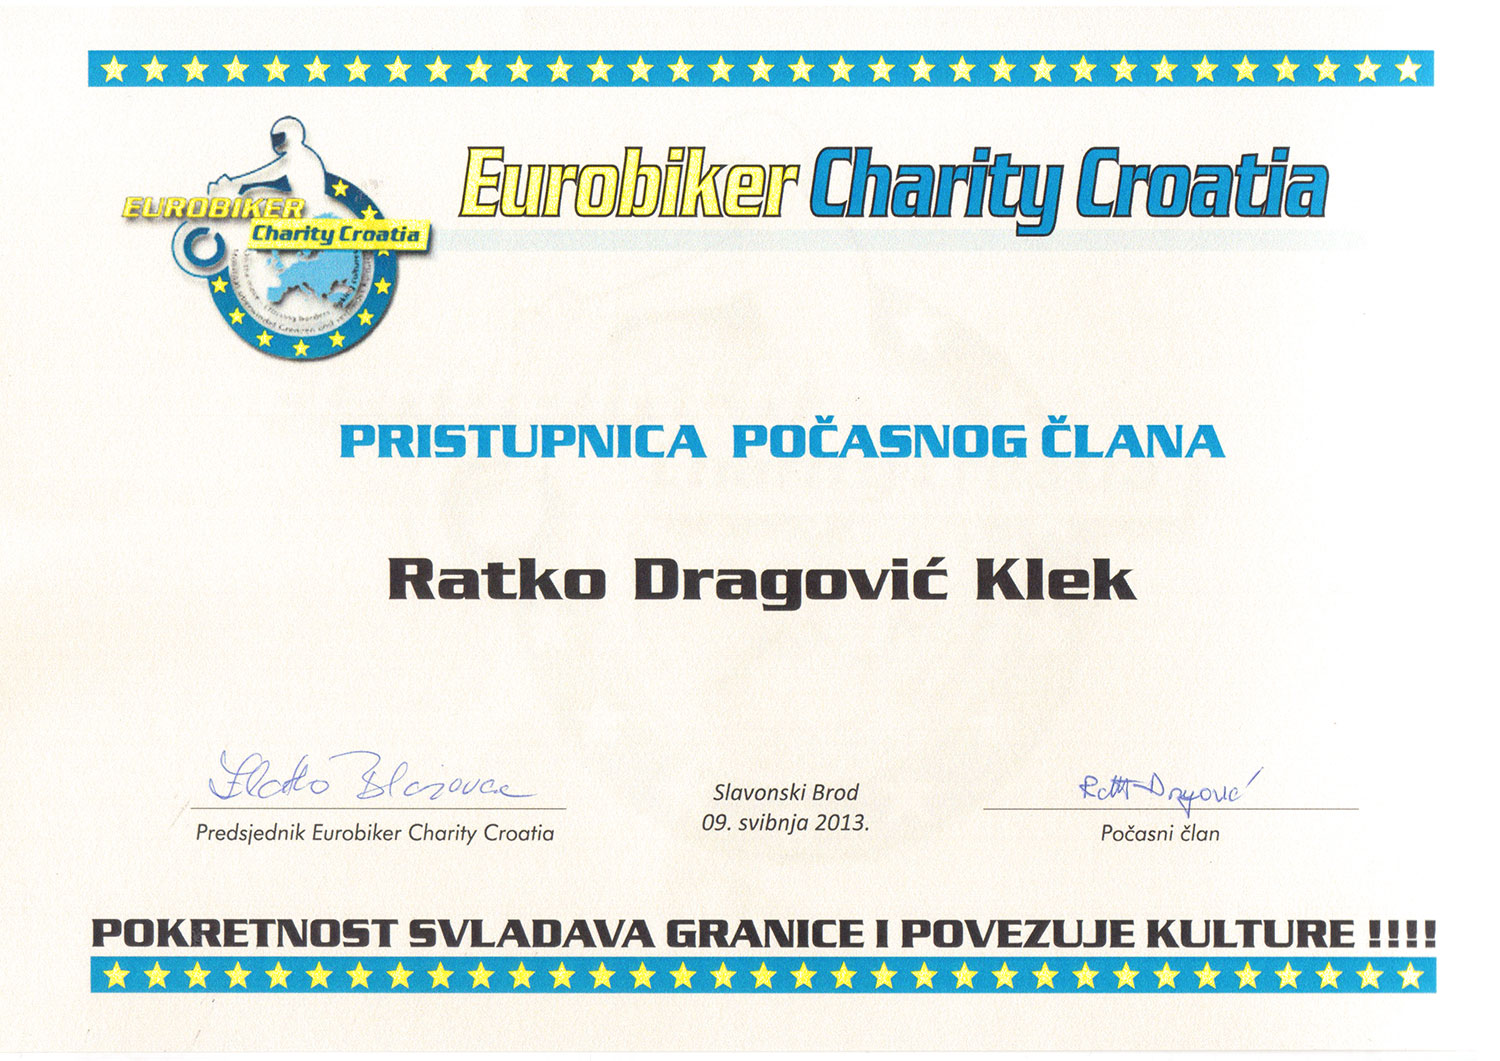 2013 05 09 pocasni clan eurobiker charity croatia